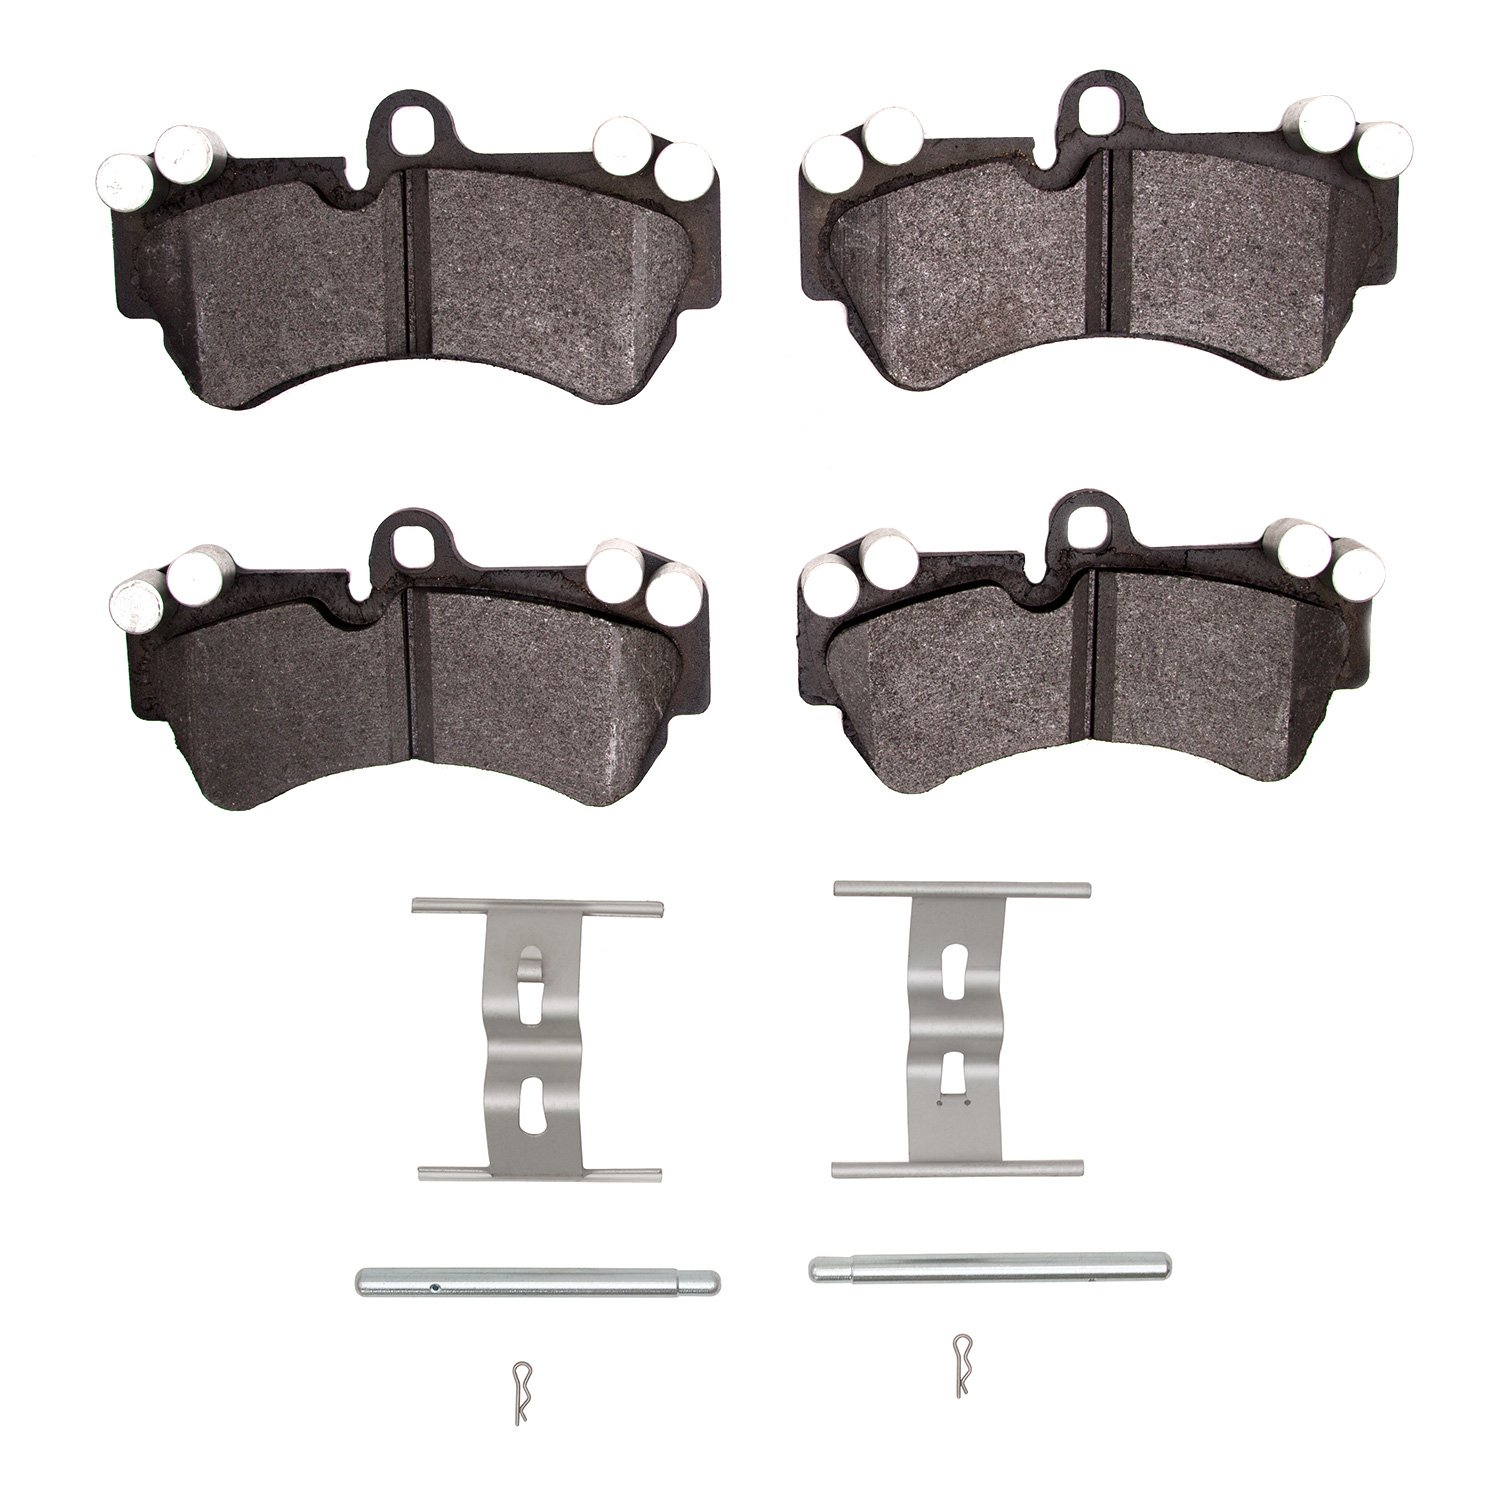 1551-1007-02 5000 Advanced Low-Metallic Brake Pads & Hardware Kit, 2003-2018 Multiple Makes/Models, Position: Front